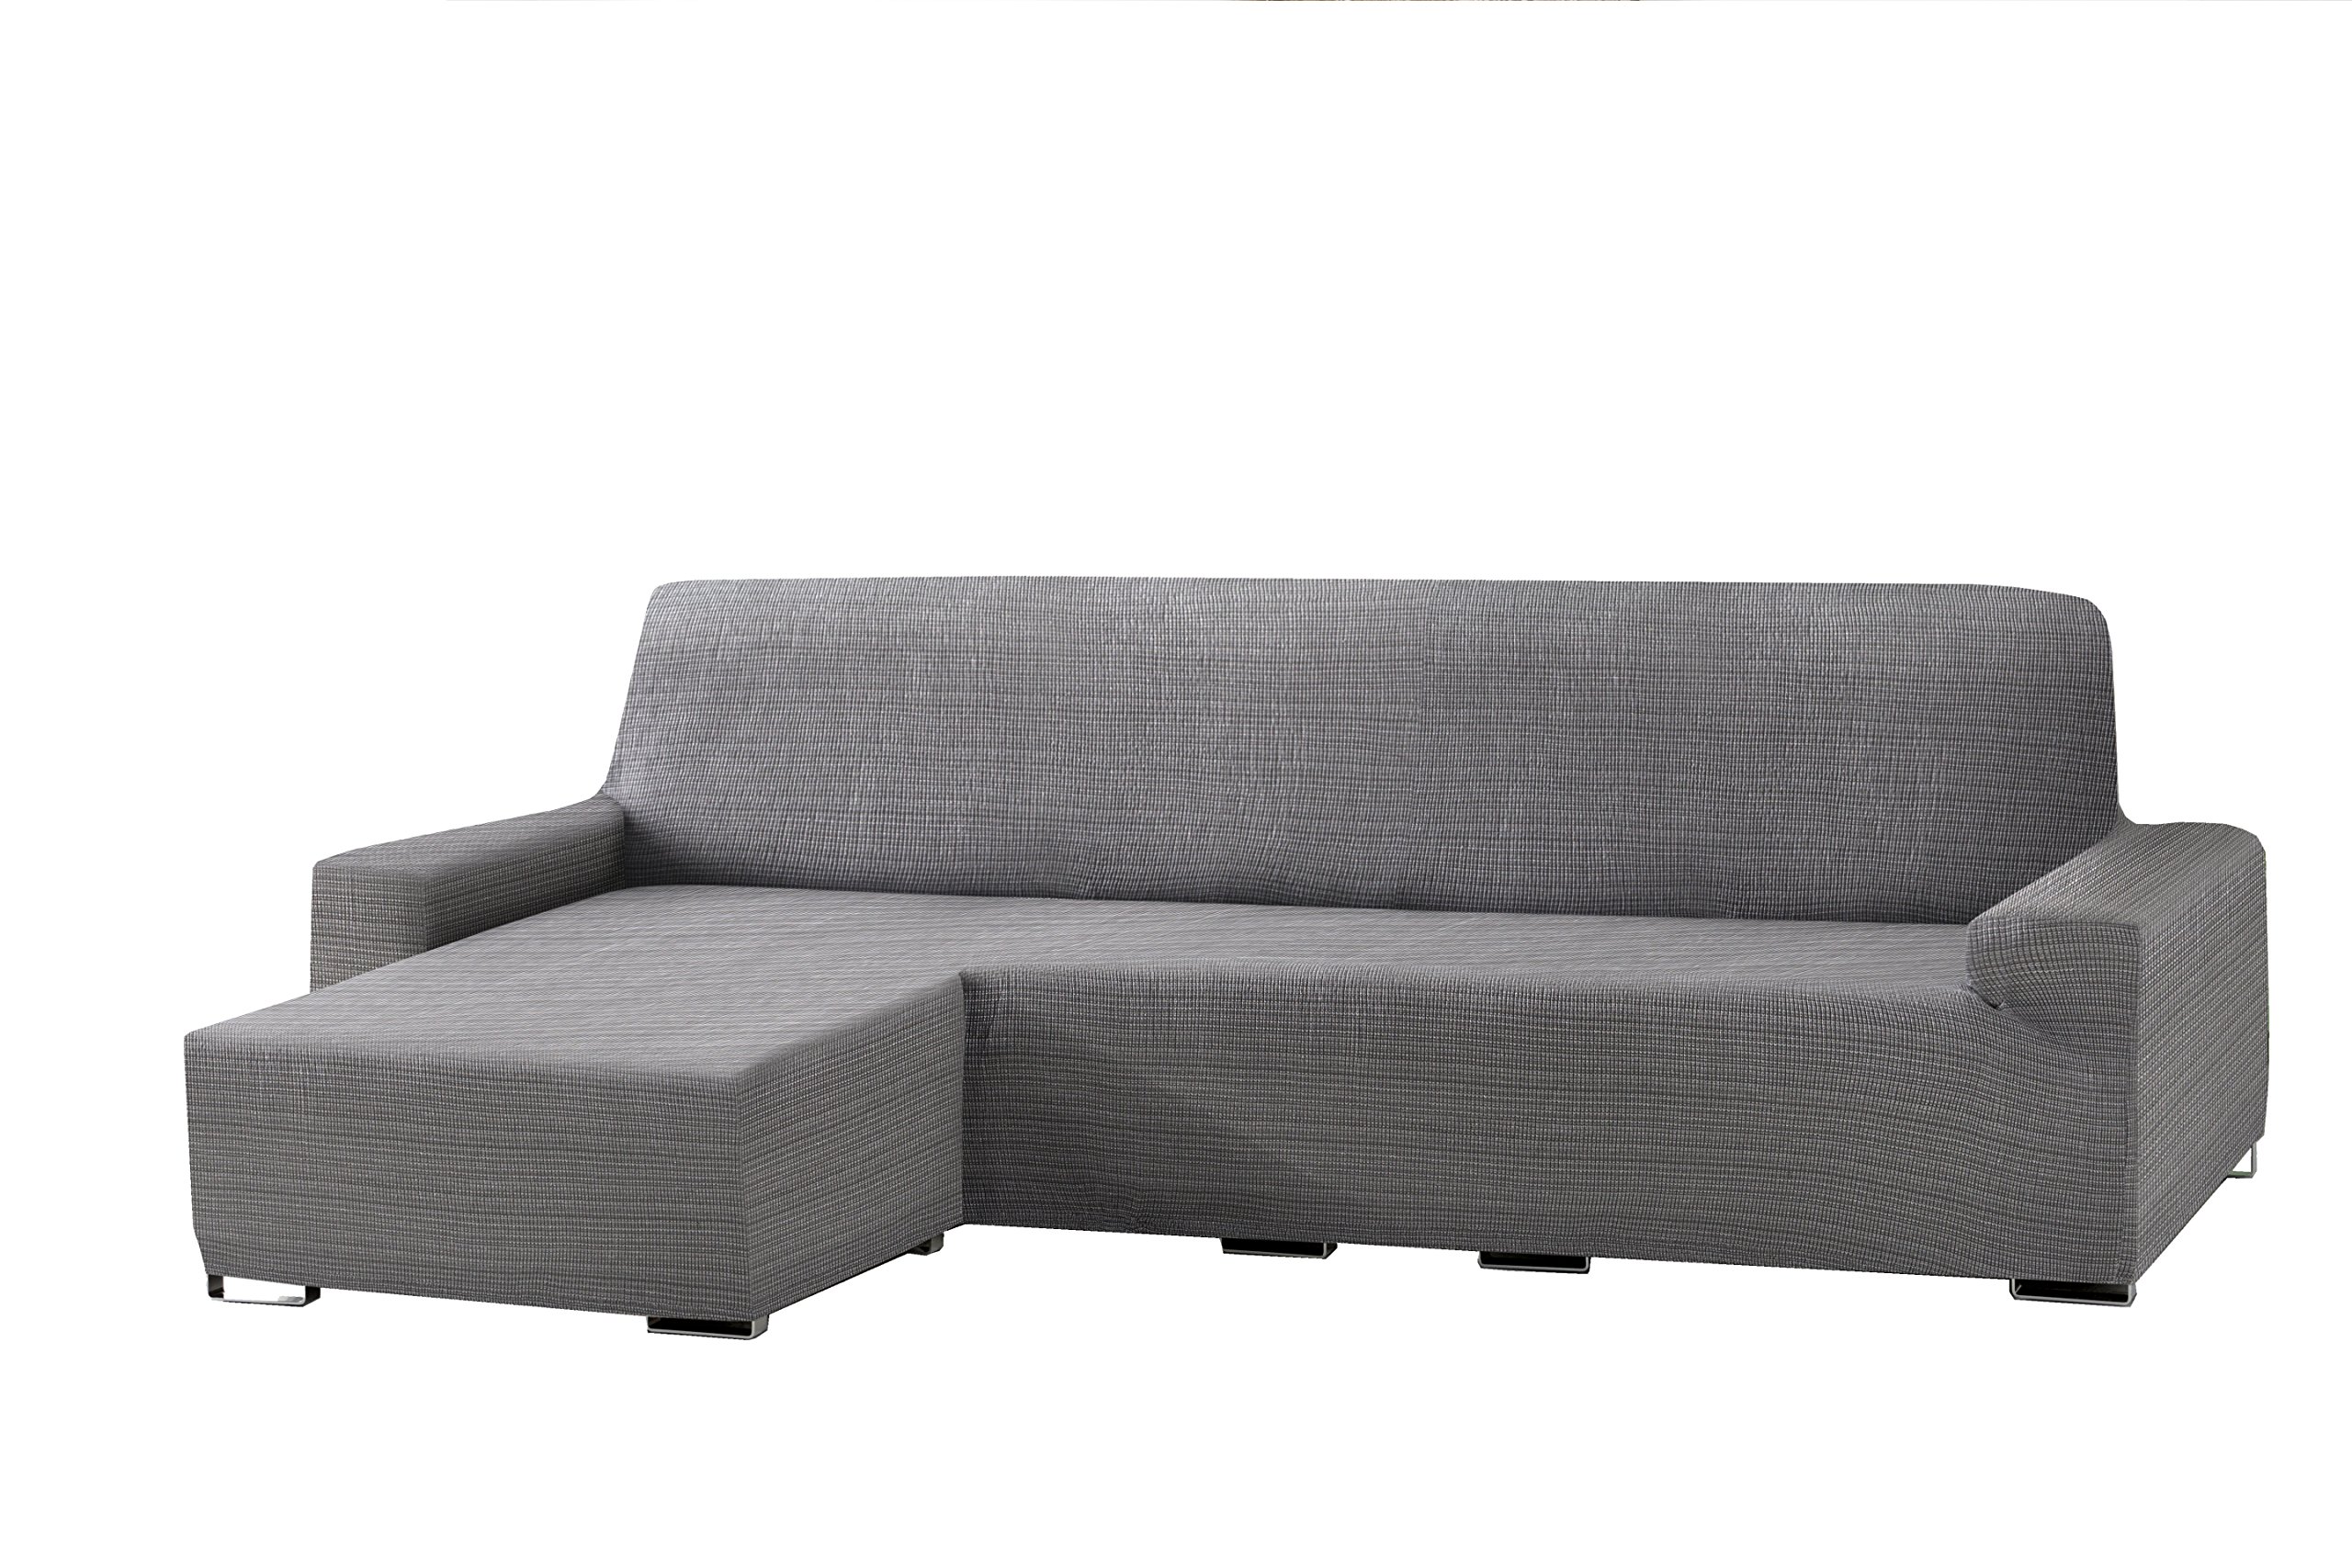 Eysa Aquiles elastisch Sofa überwurf Chaise Longue kurzer arm Links, frontalsicht, Farbe 06-grau, Polyester-Baumwolle, 43 x 37 x 14 cm